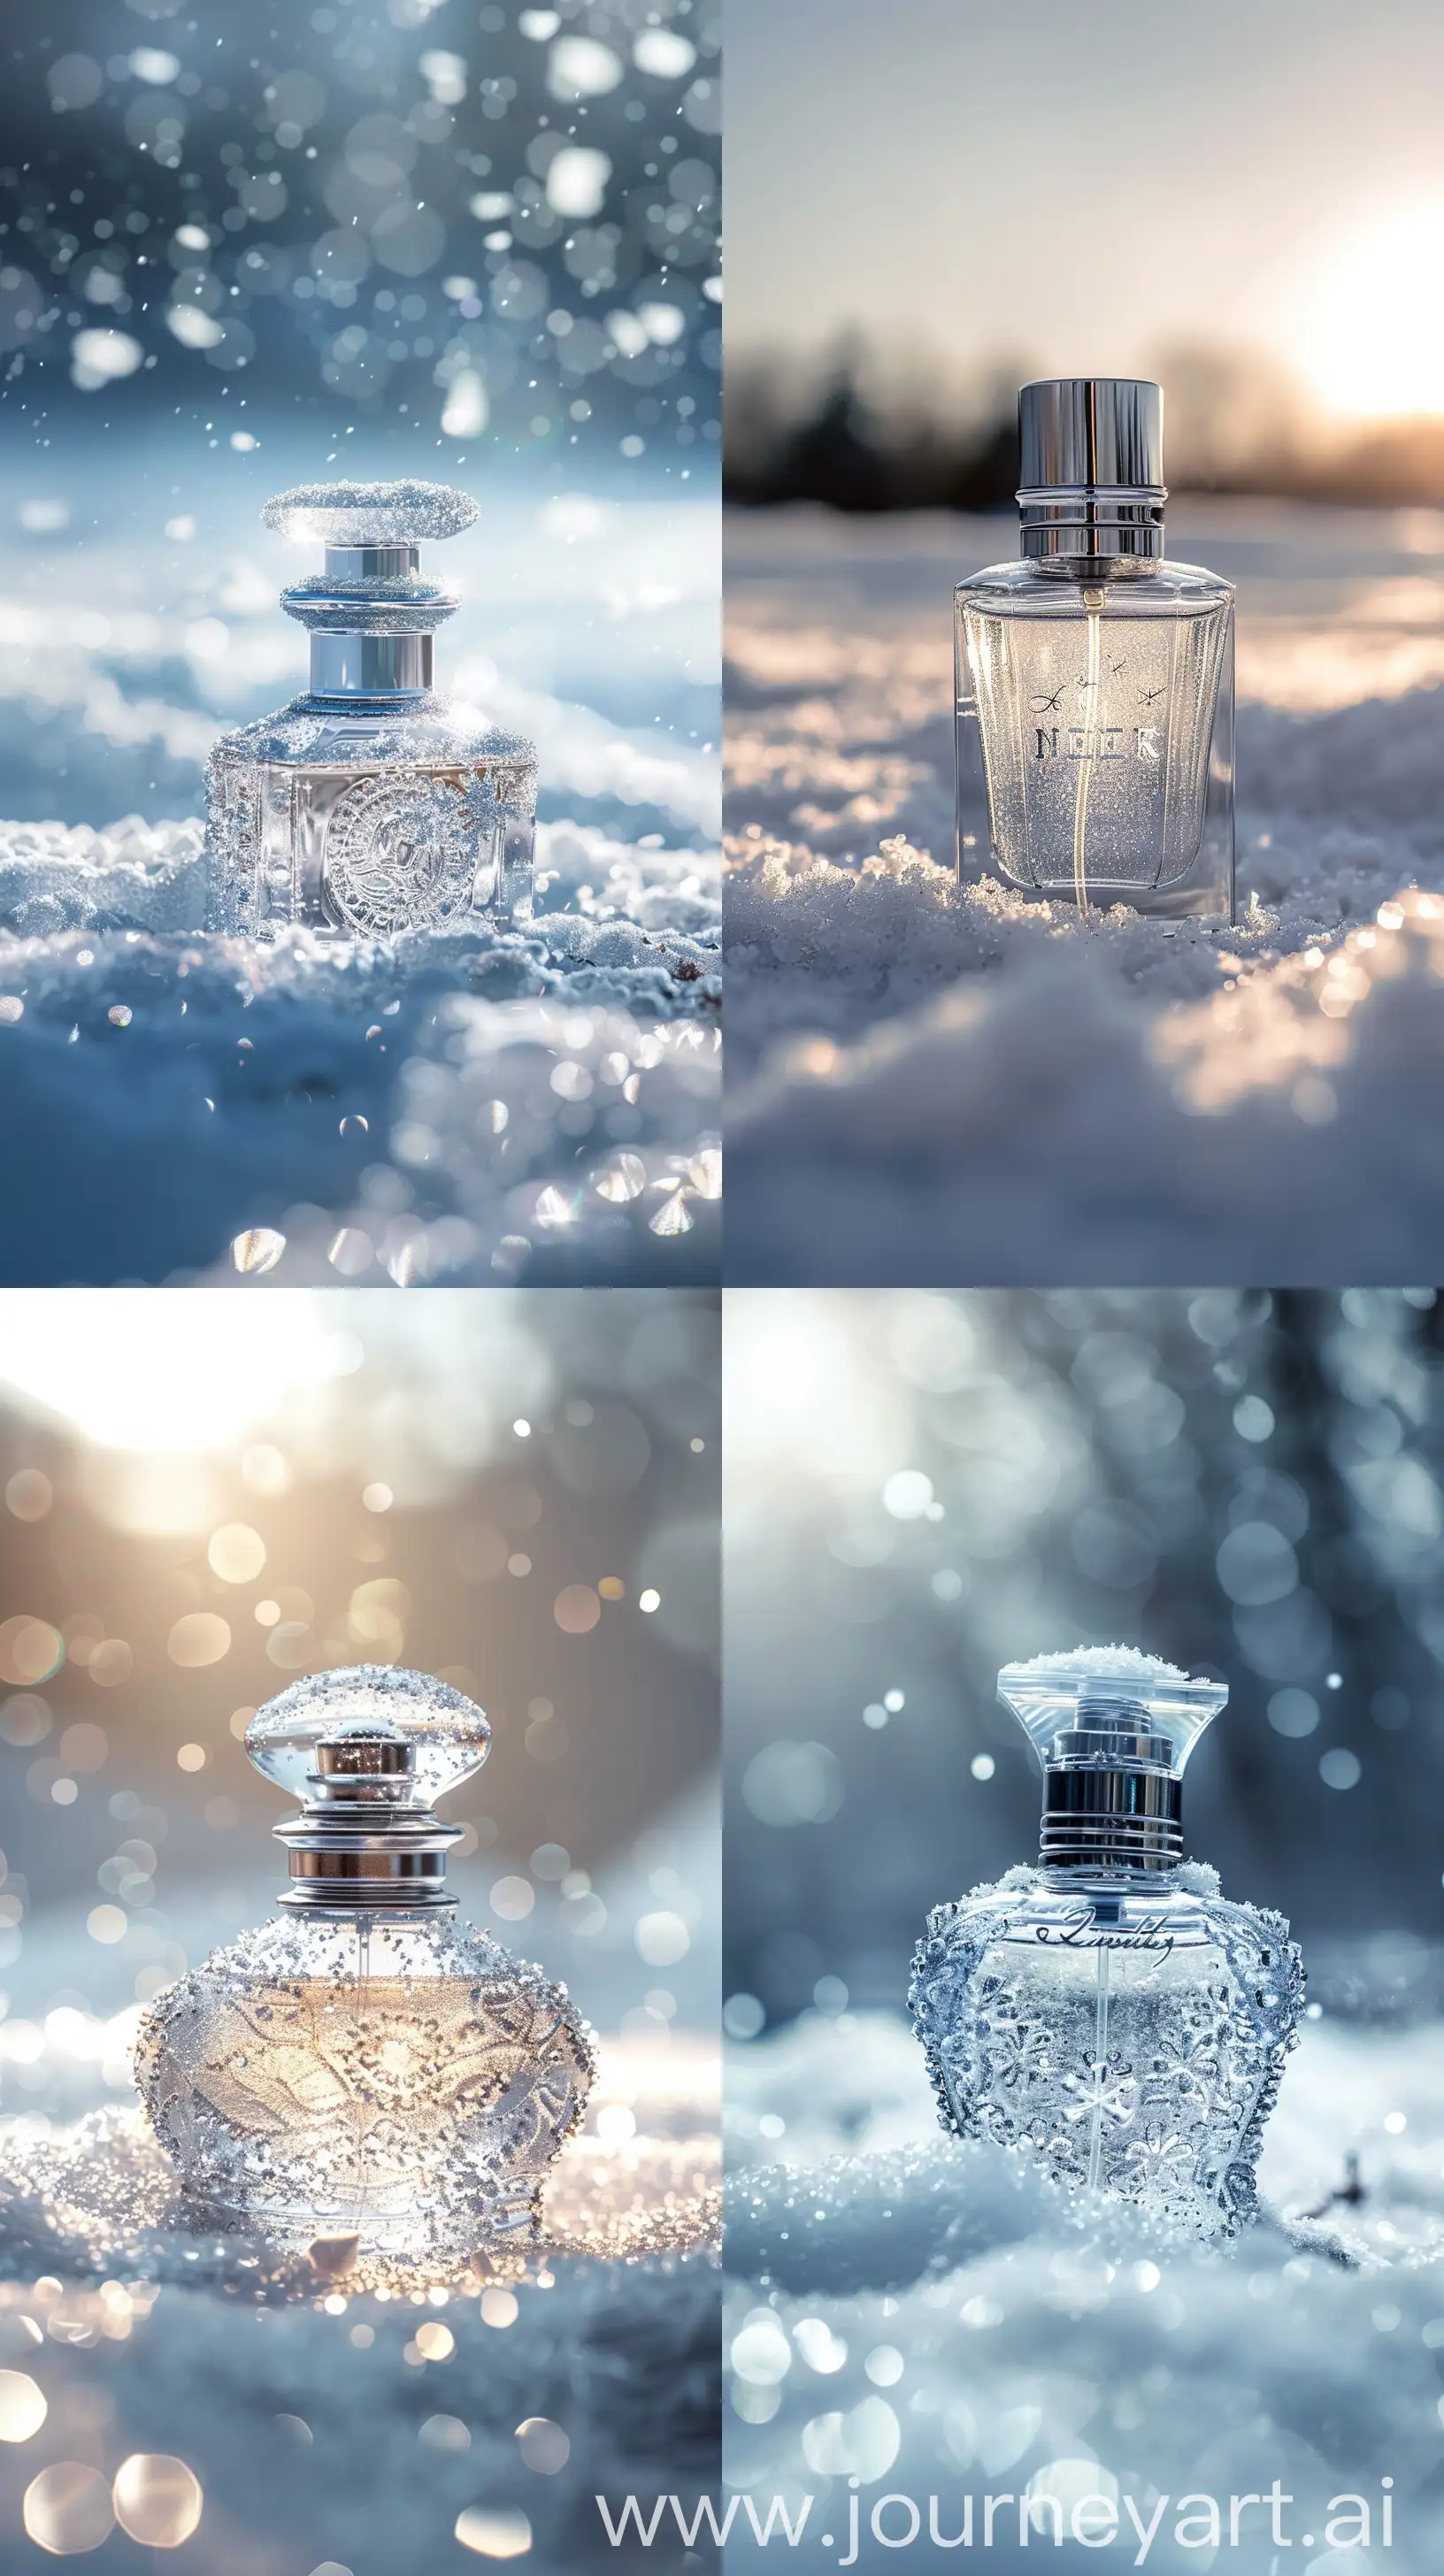 Luxury-Perfume-Bottle-in-Angelic-Snowy-Setting